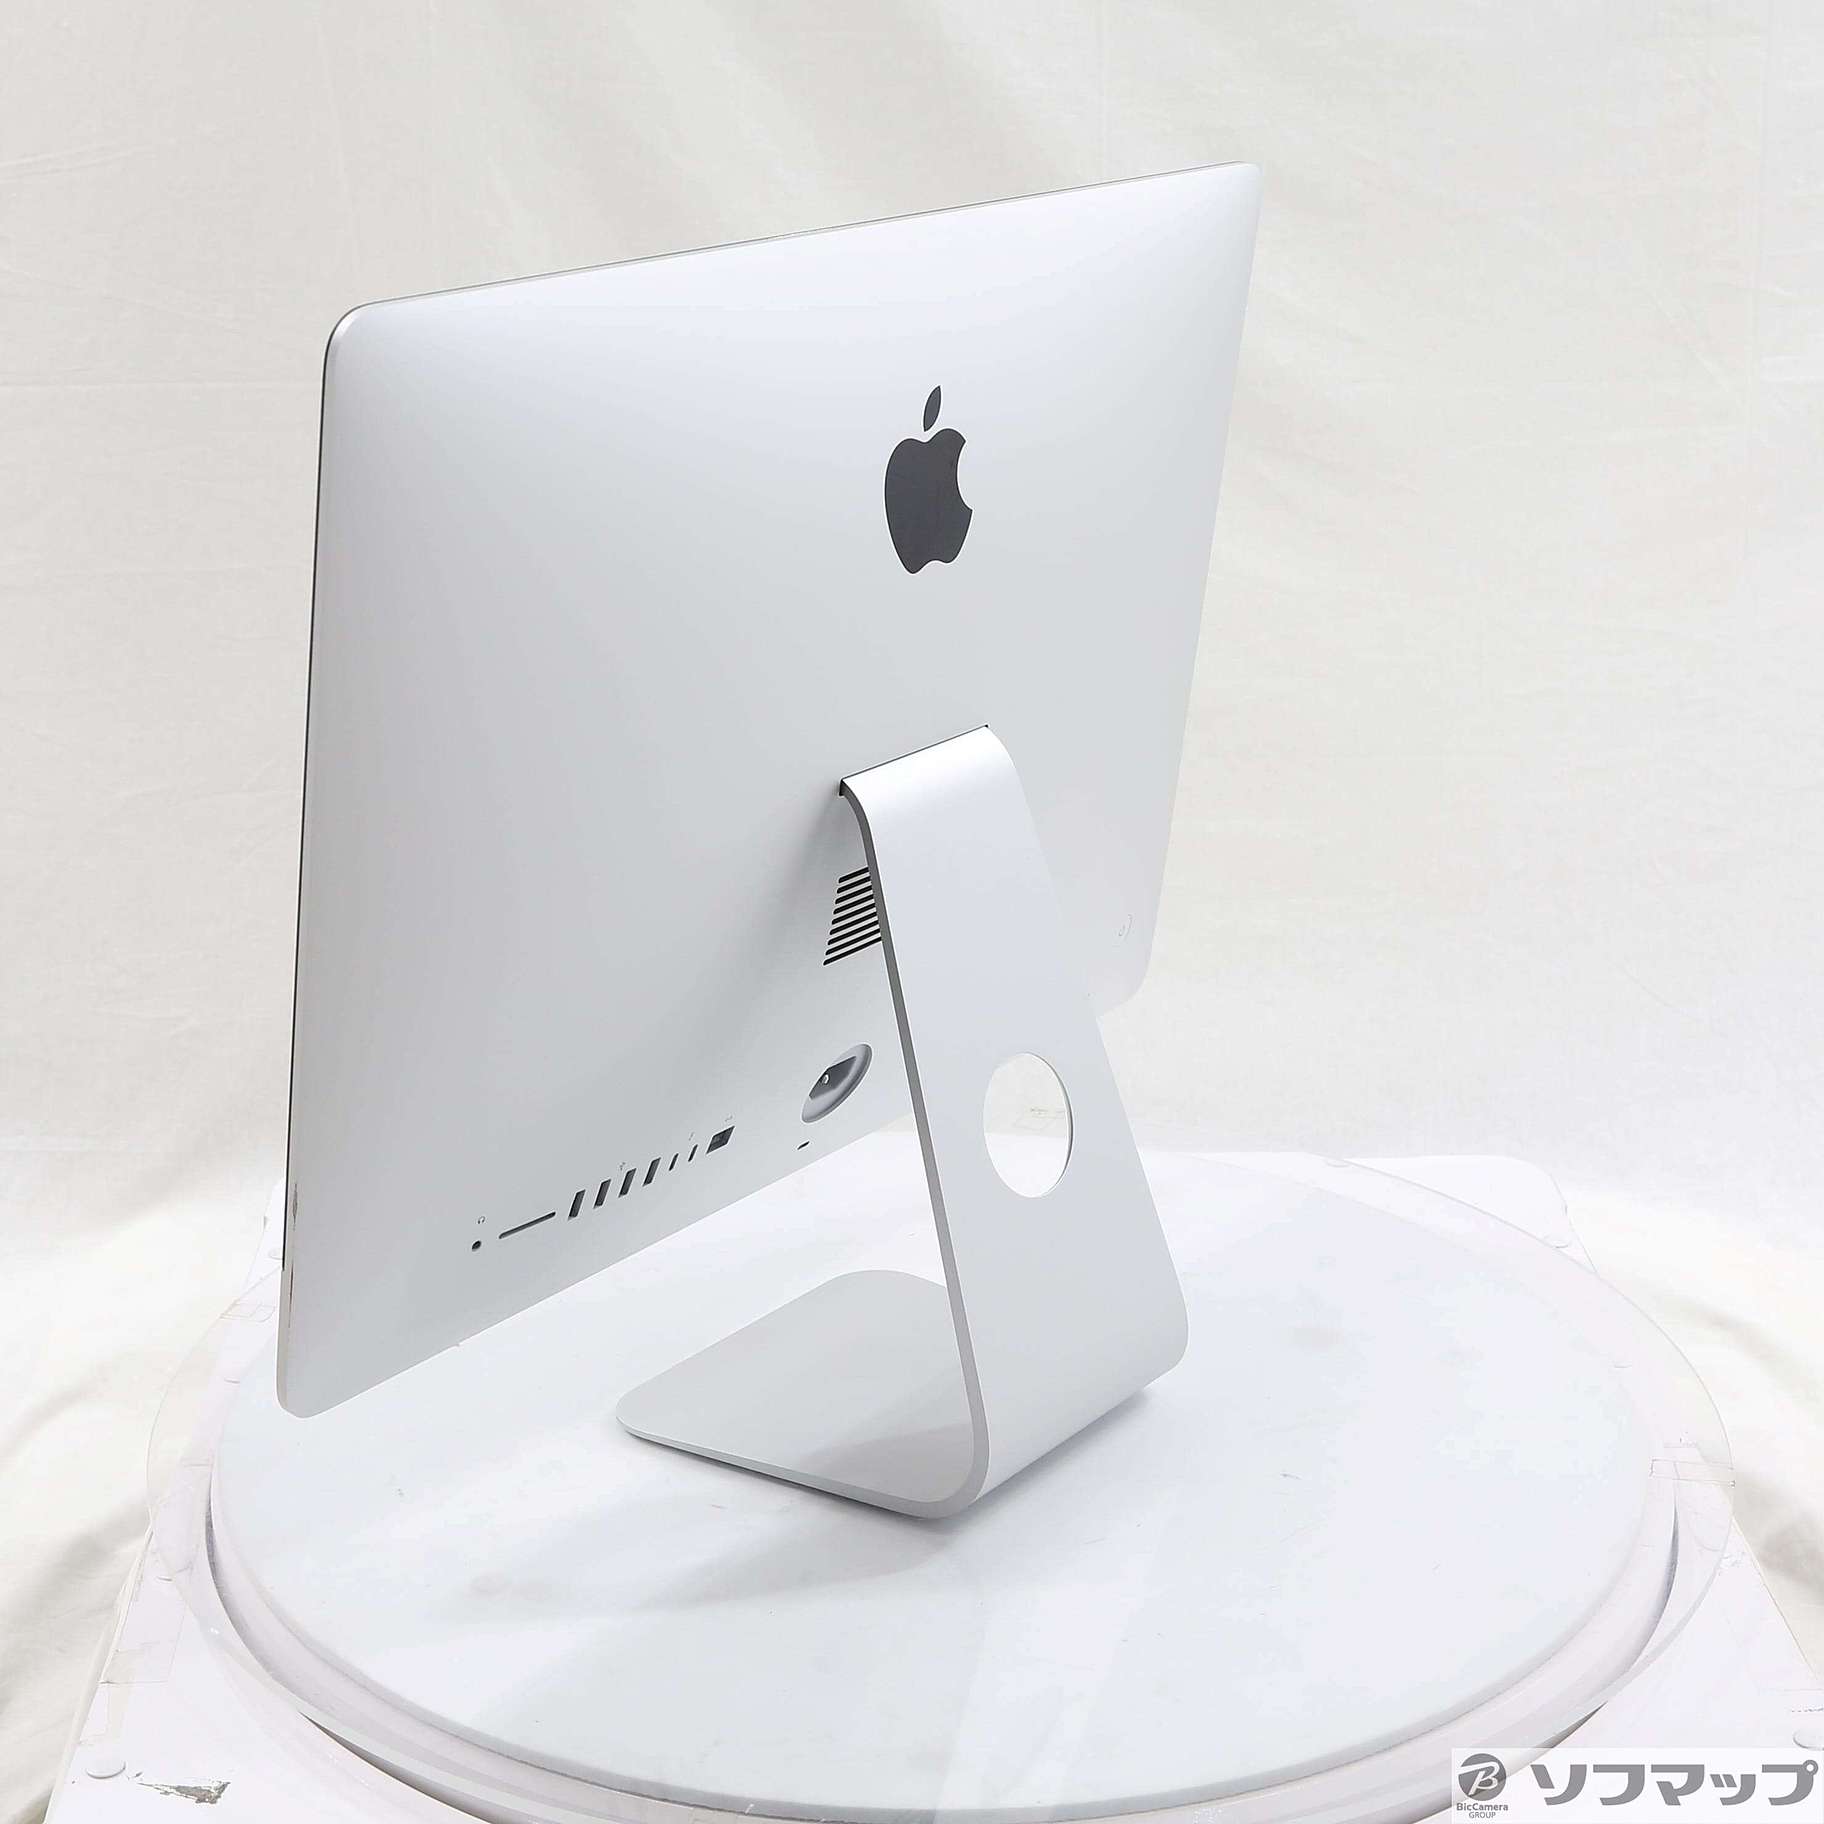 iMac 27 21.5インチ Mid 2011用 内蔵HDD交換取付センサーケーブル ...